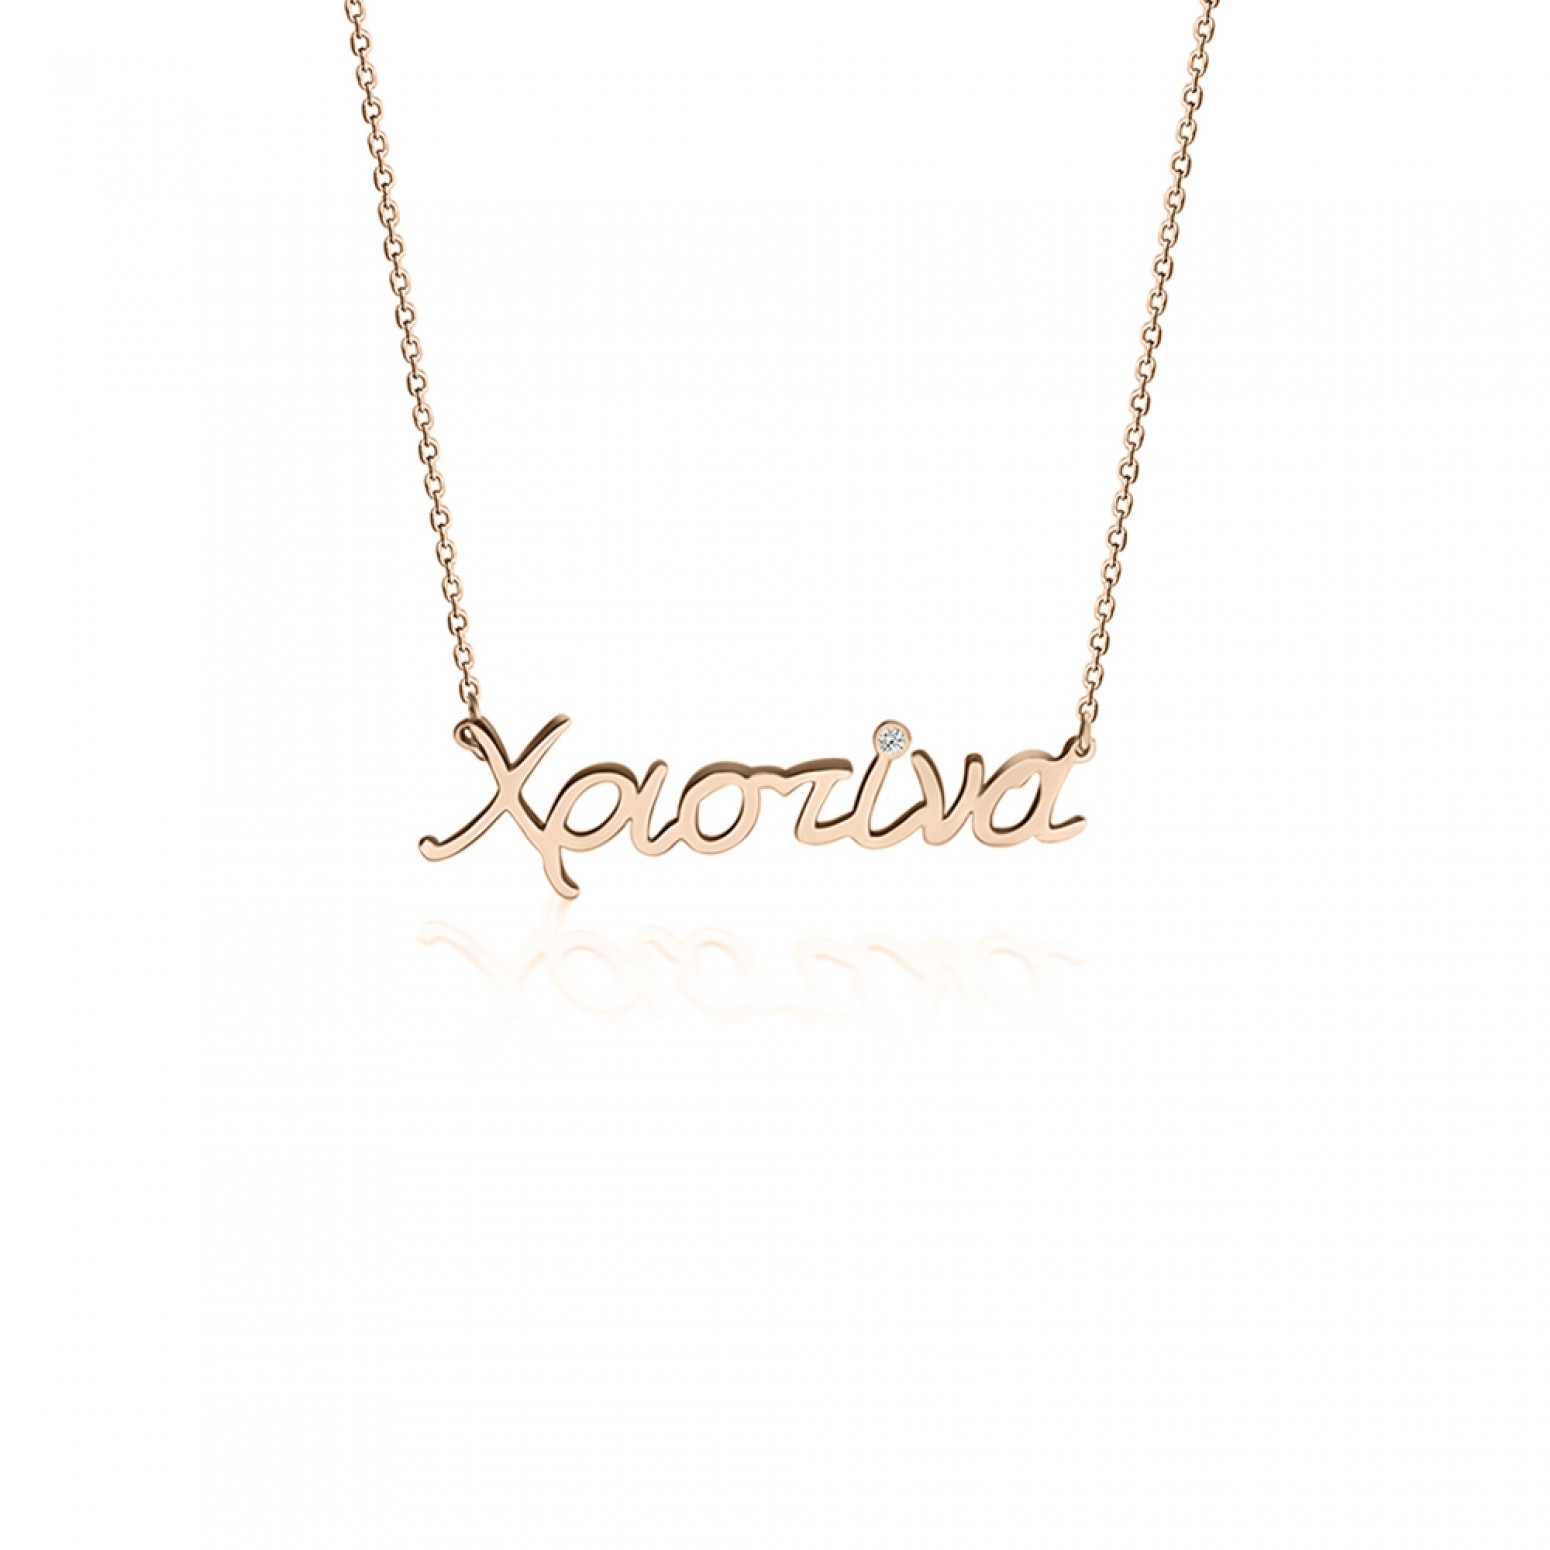 Name necklace Χριστίνα, Κ14 pink gold with diamond 0.004ct, VS2, H ko5327 NECKLACES Κοσμηματα - chrilia.gr